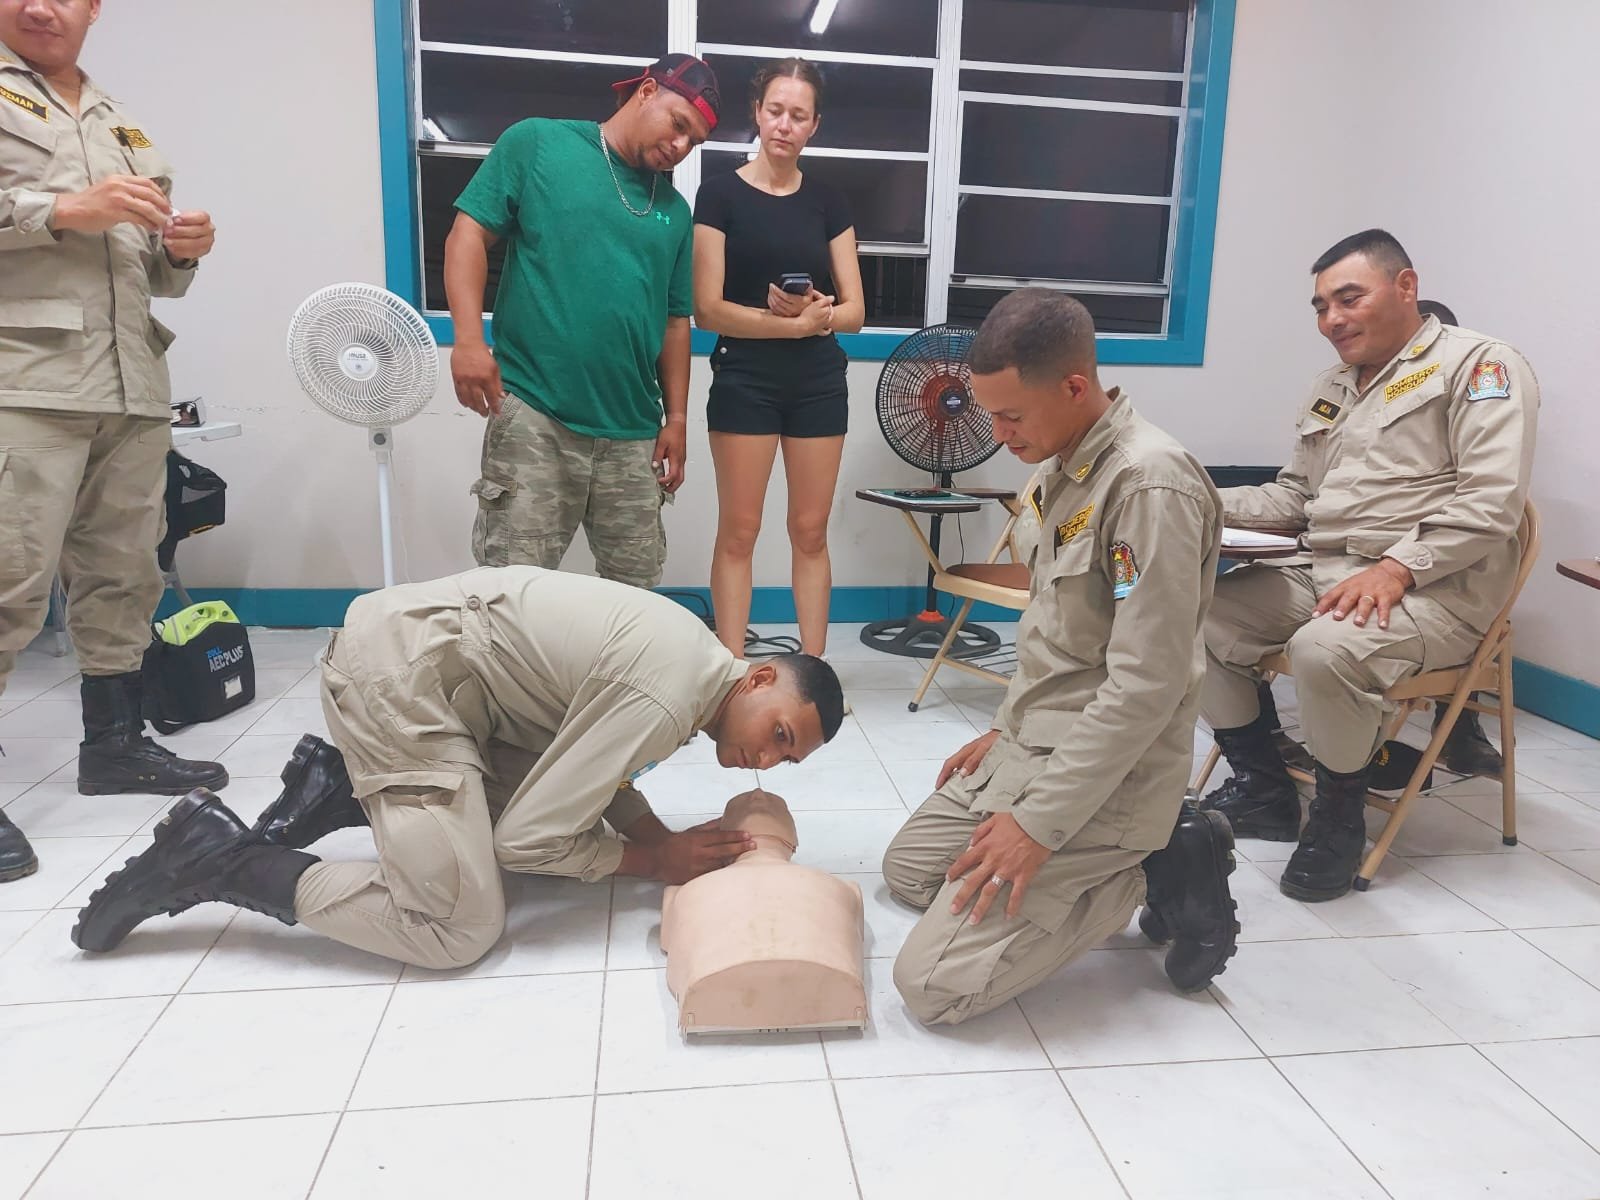 Island-Diving-Center-Emergency-First-Response-CPR-Training-Roatan-Fire-Department-33.jpg